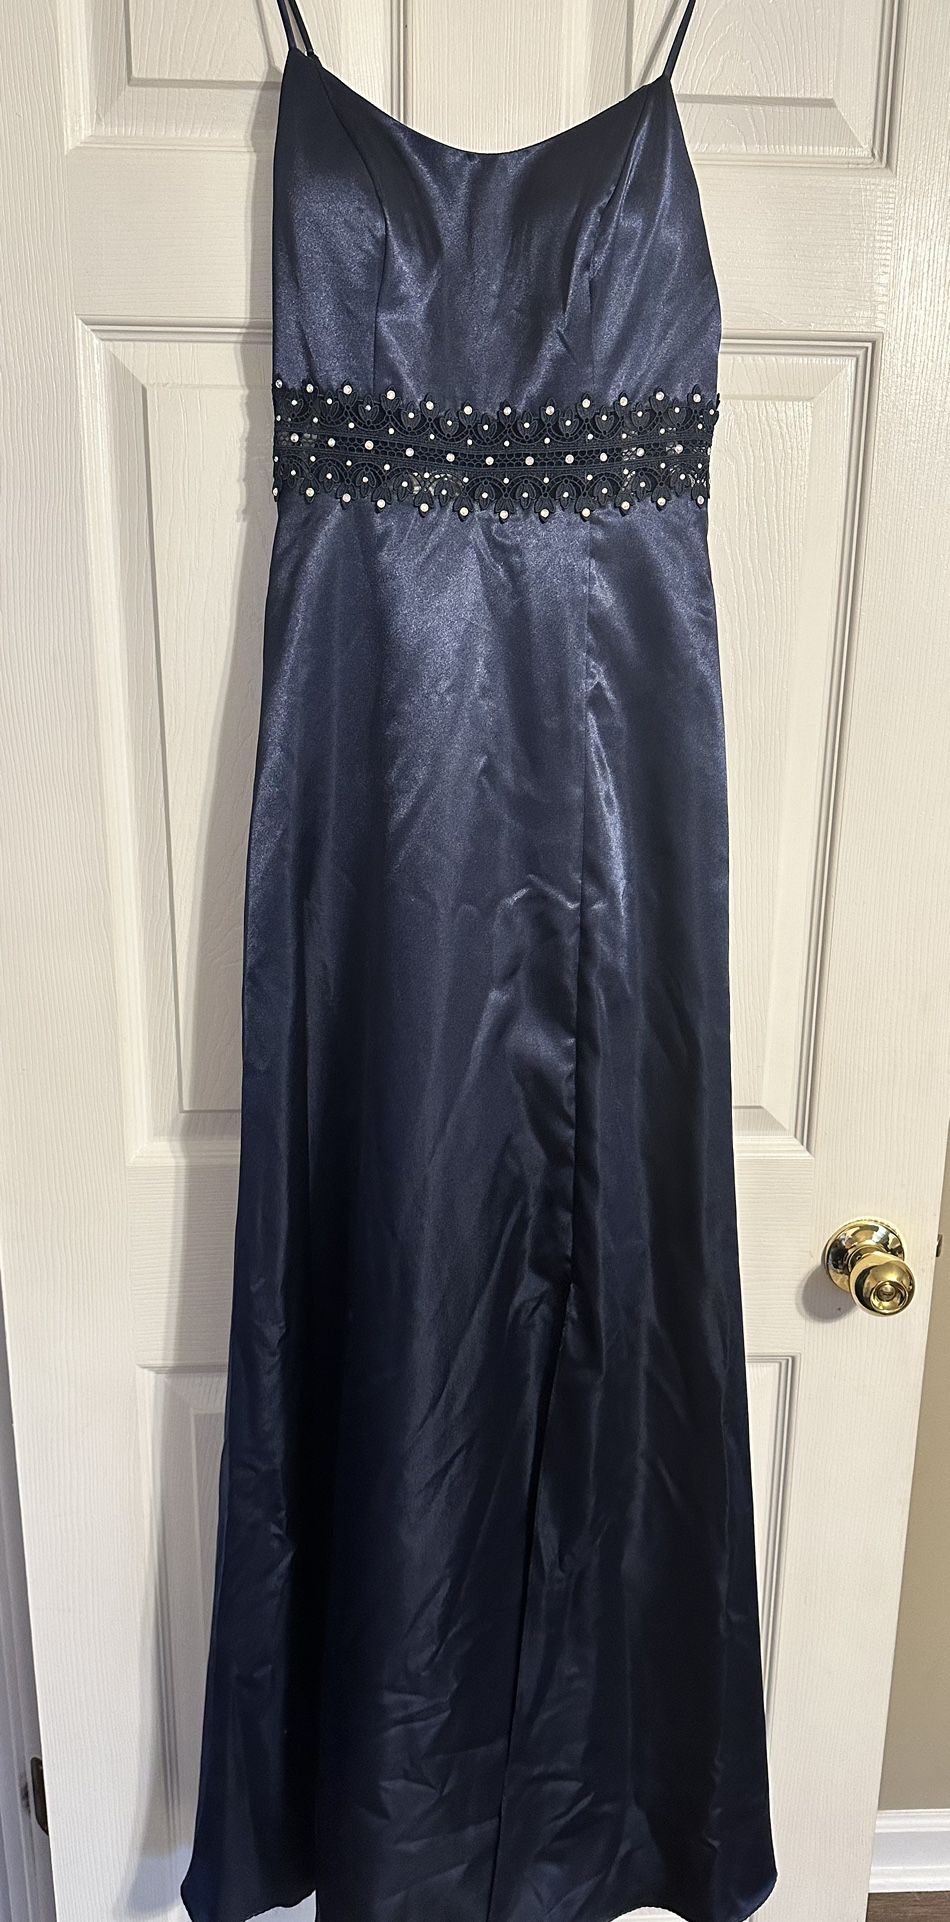 size 2 navy prom dress from david’s bridal